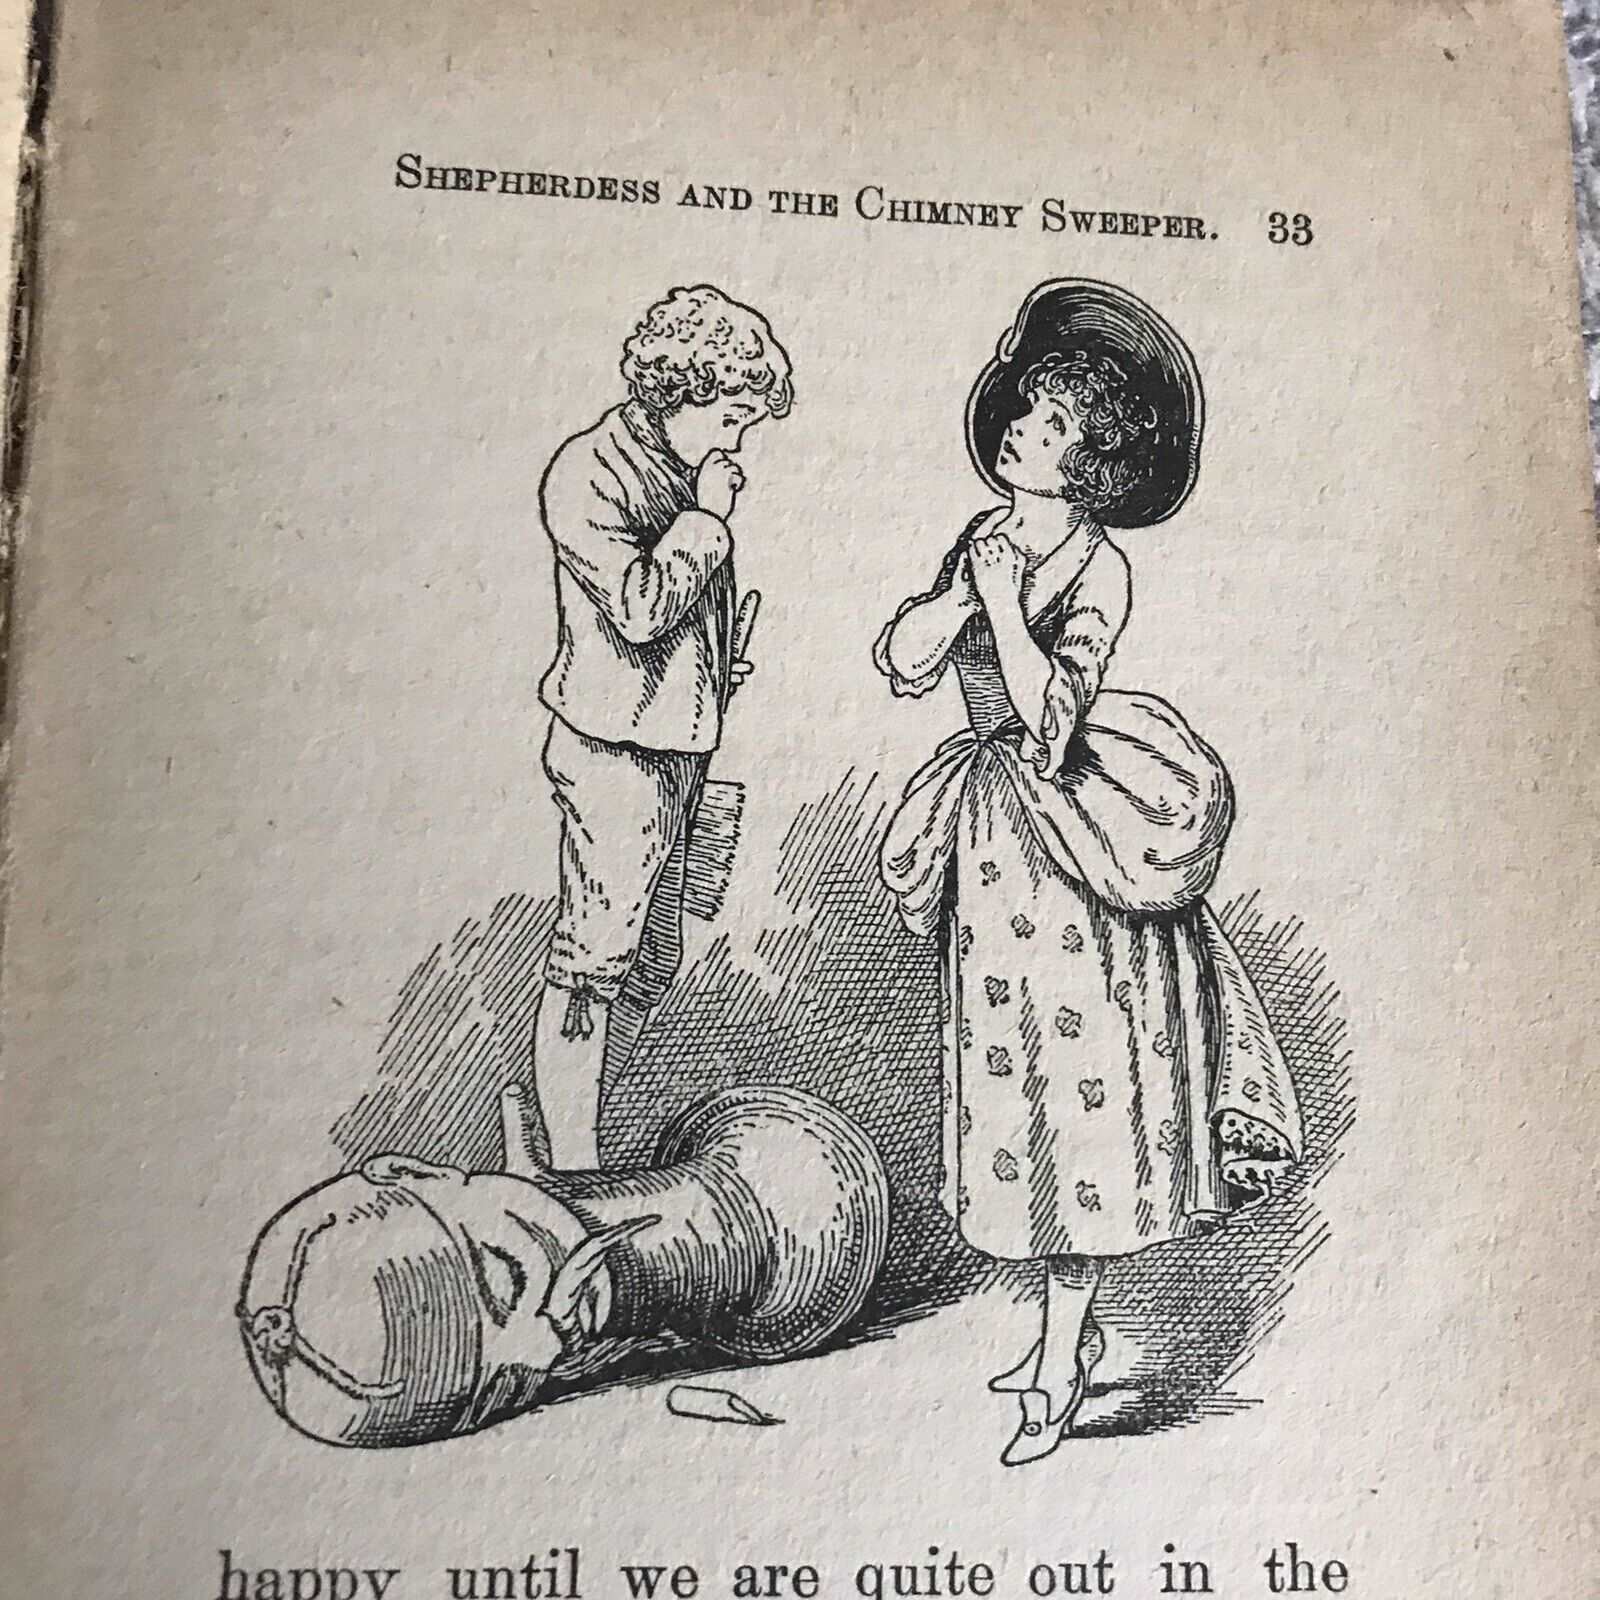 1912 The Ugly Duckling & Other Stories - Hans Andersen(Raphael Tuck) Honeyburn Books (UK)